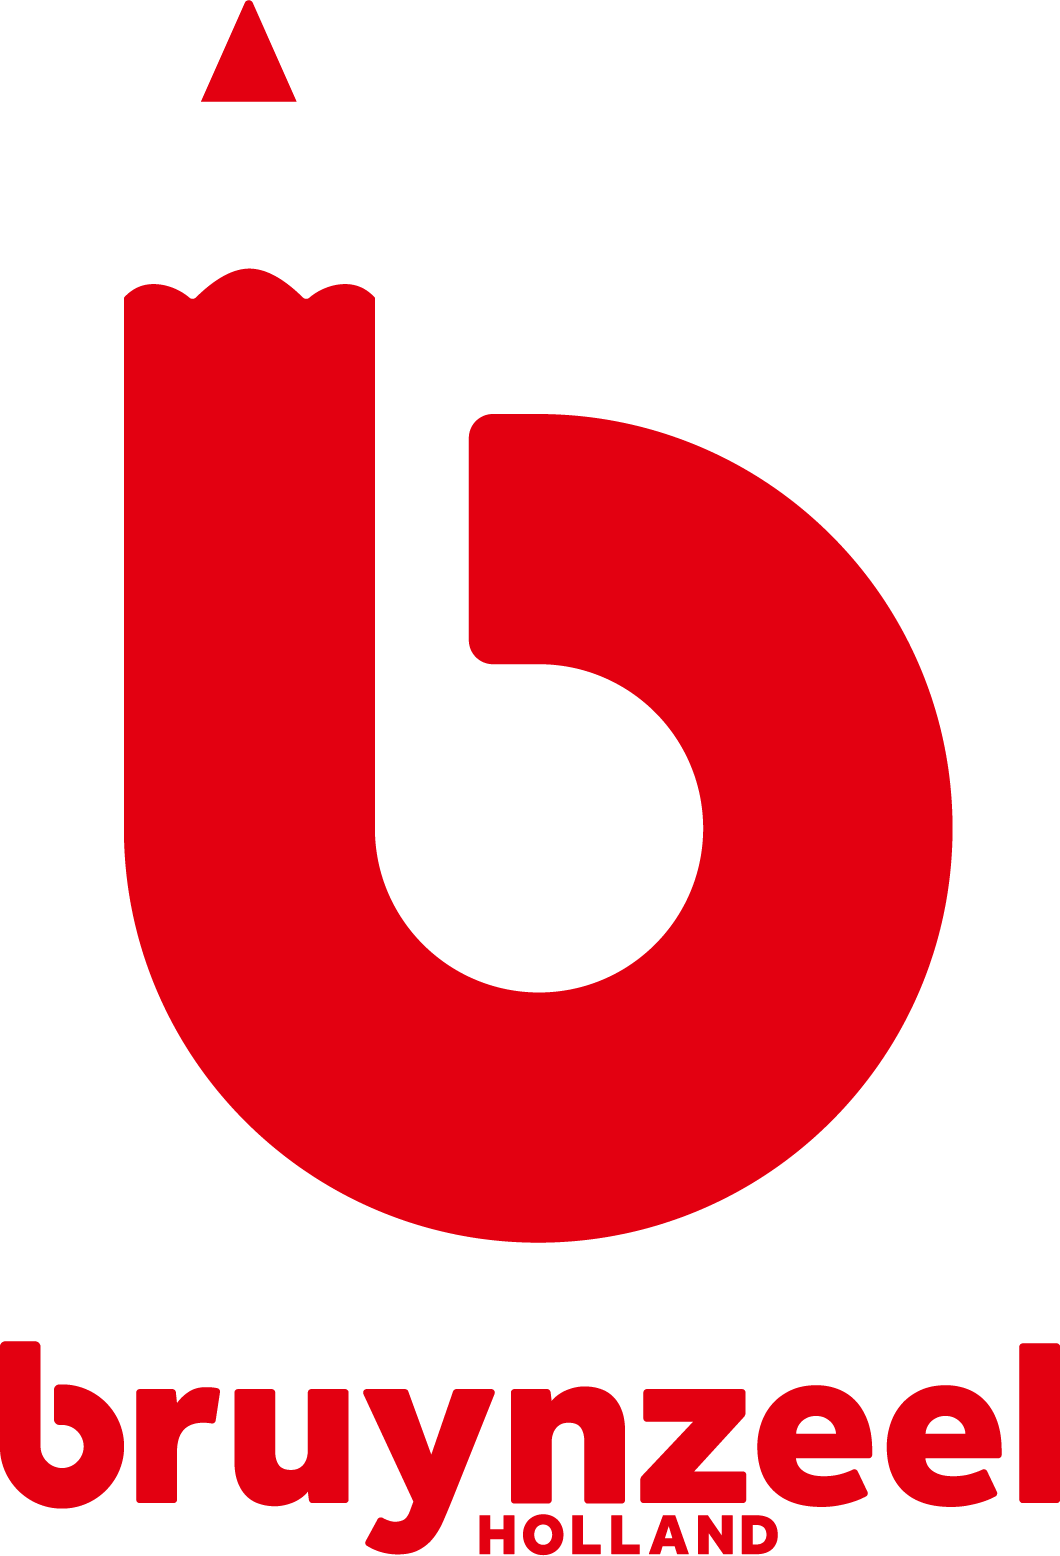 Bruynzeel logo.